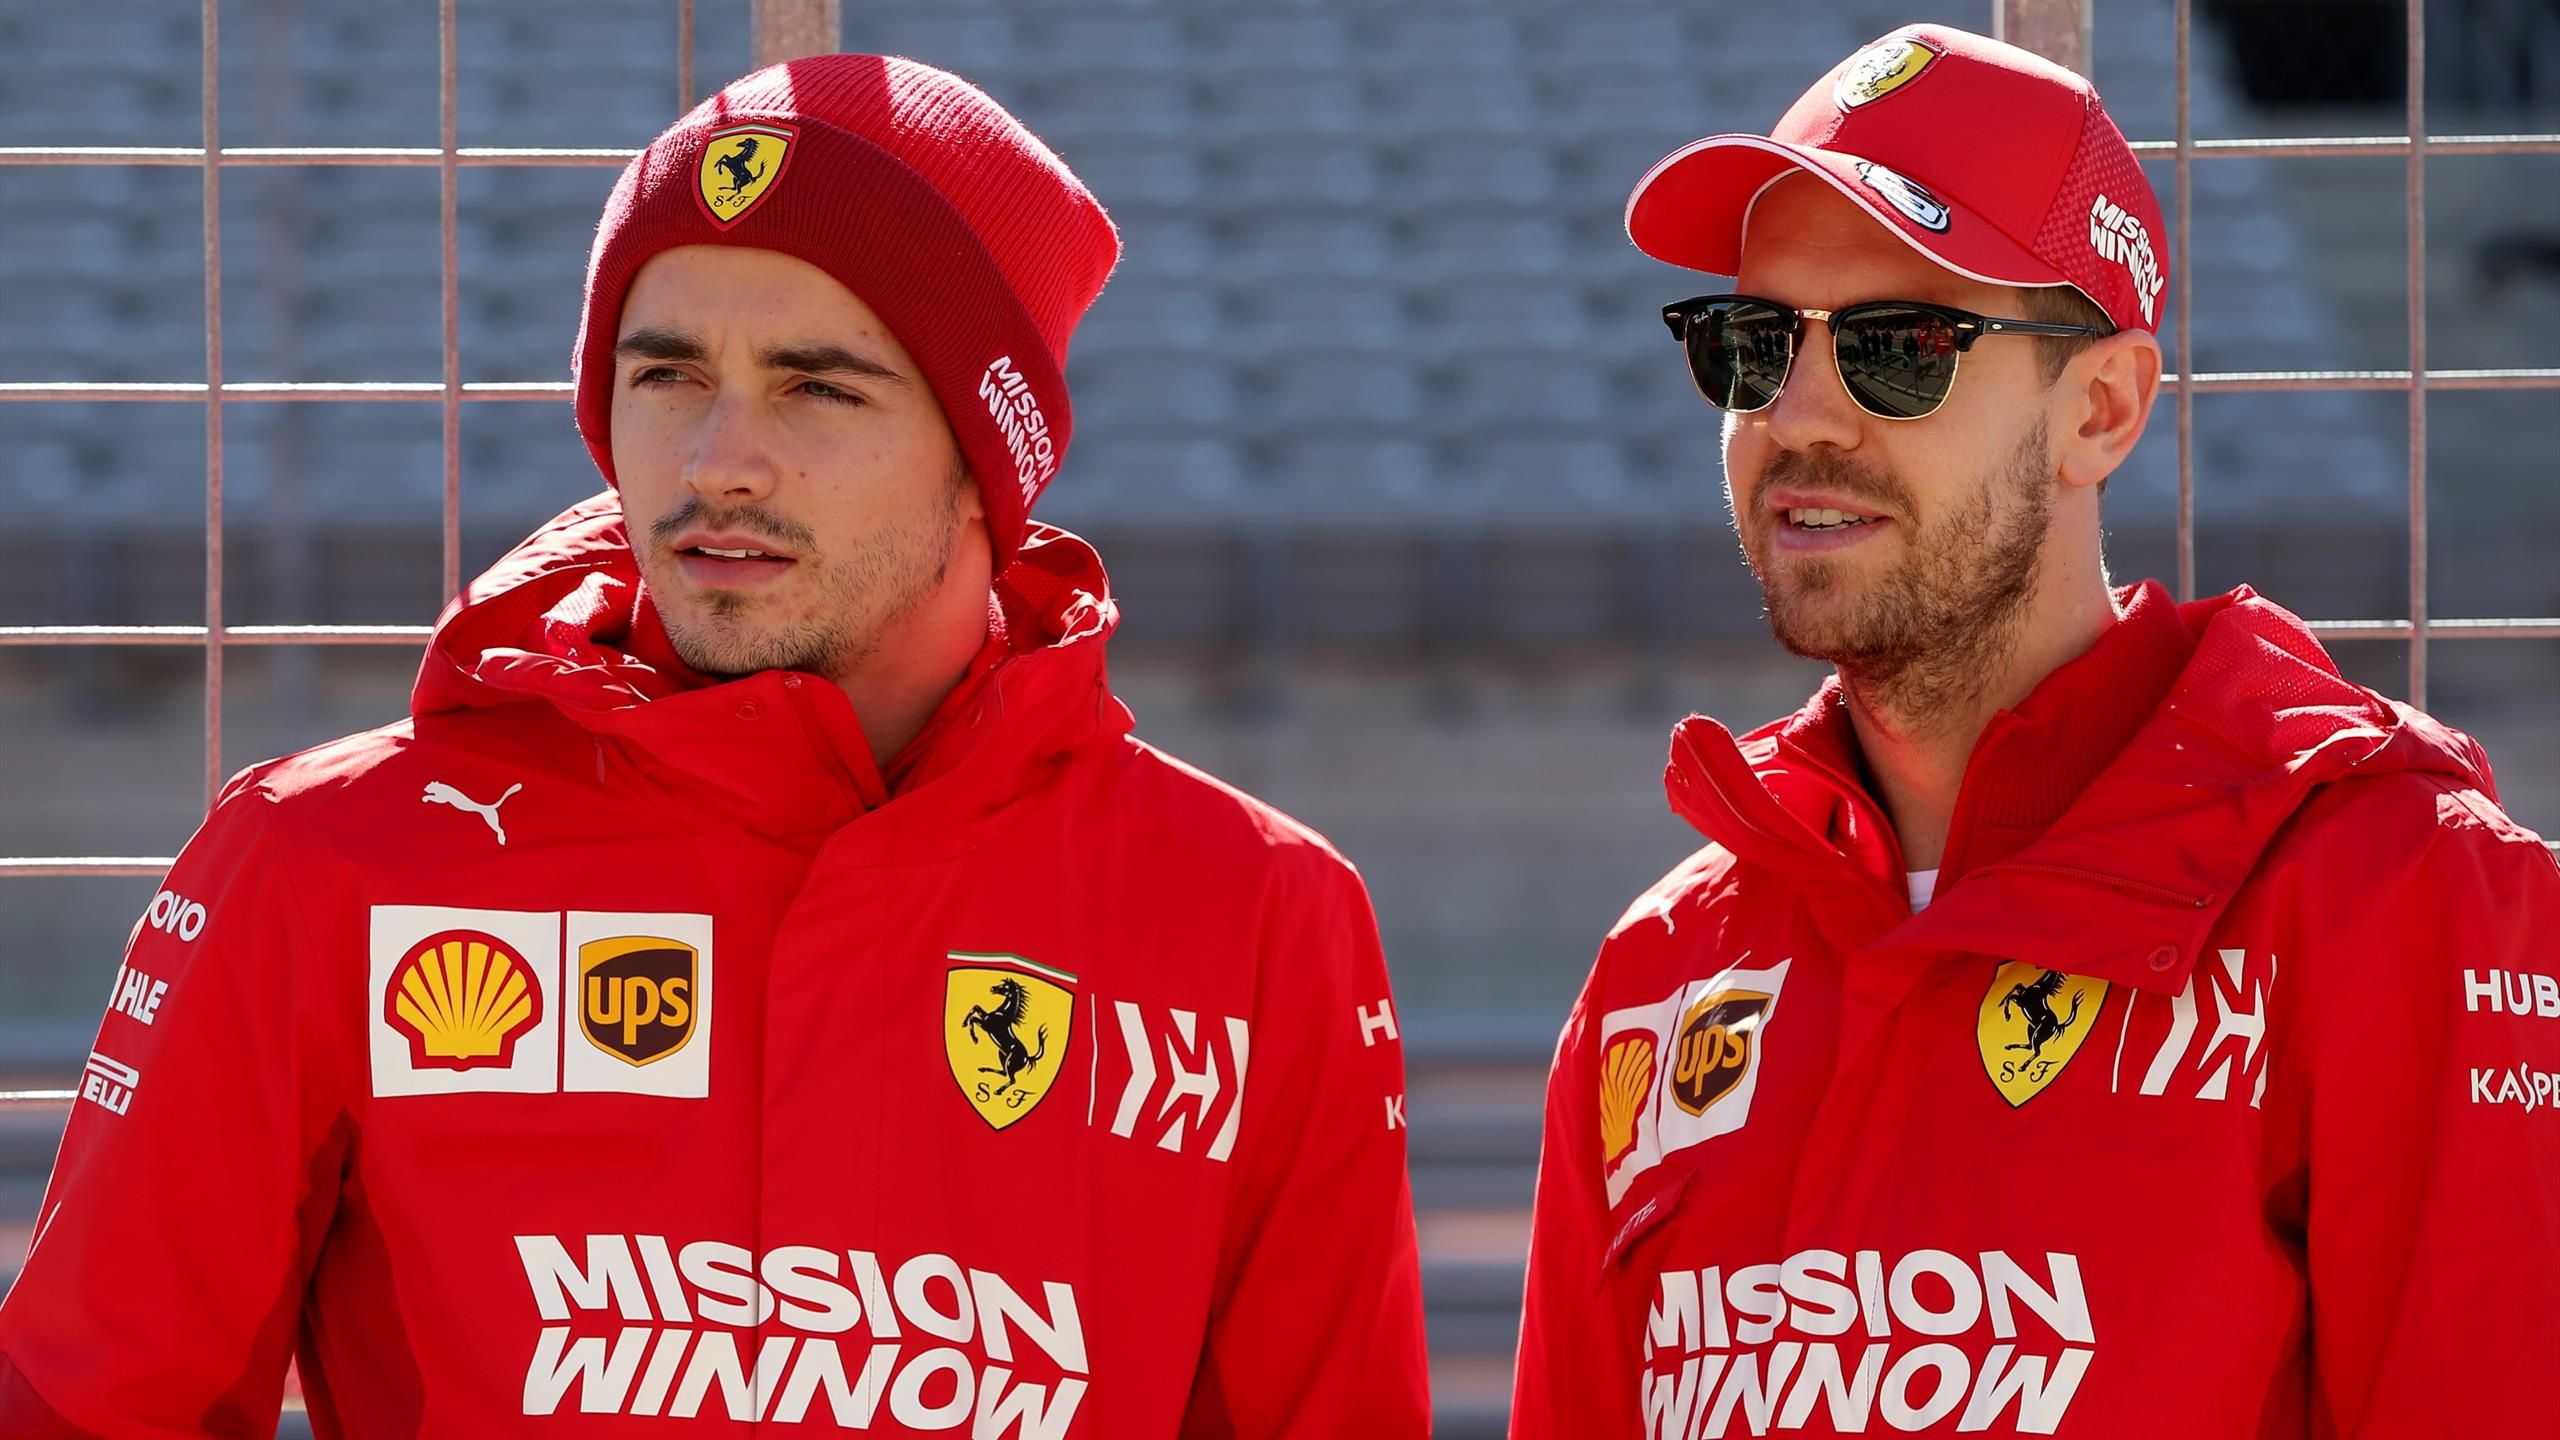 Charles Leclerc claims pole at 2023 United States Grand Prix for Ferrari,  Lewis Hamilton lands third spot - Eurosport